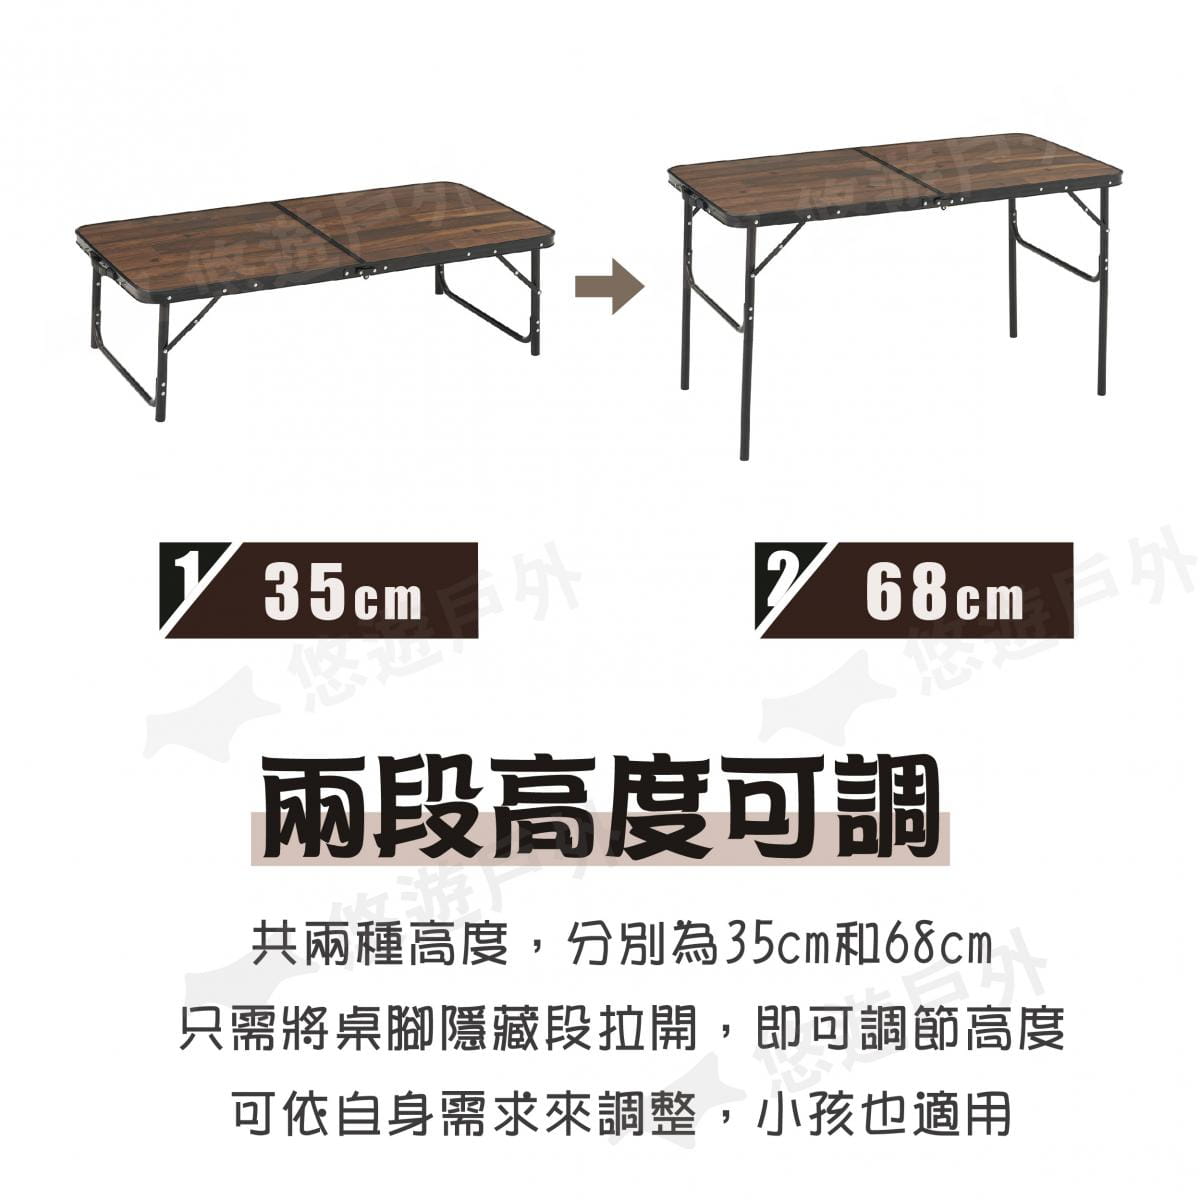 【日本LOGOS】仿枕木紋折合桌12060-LG73188041 2